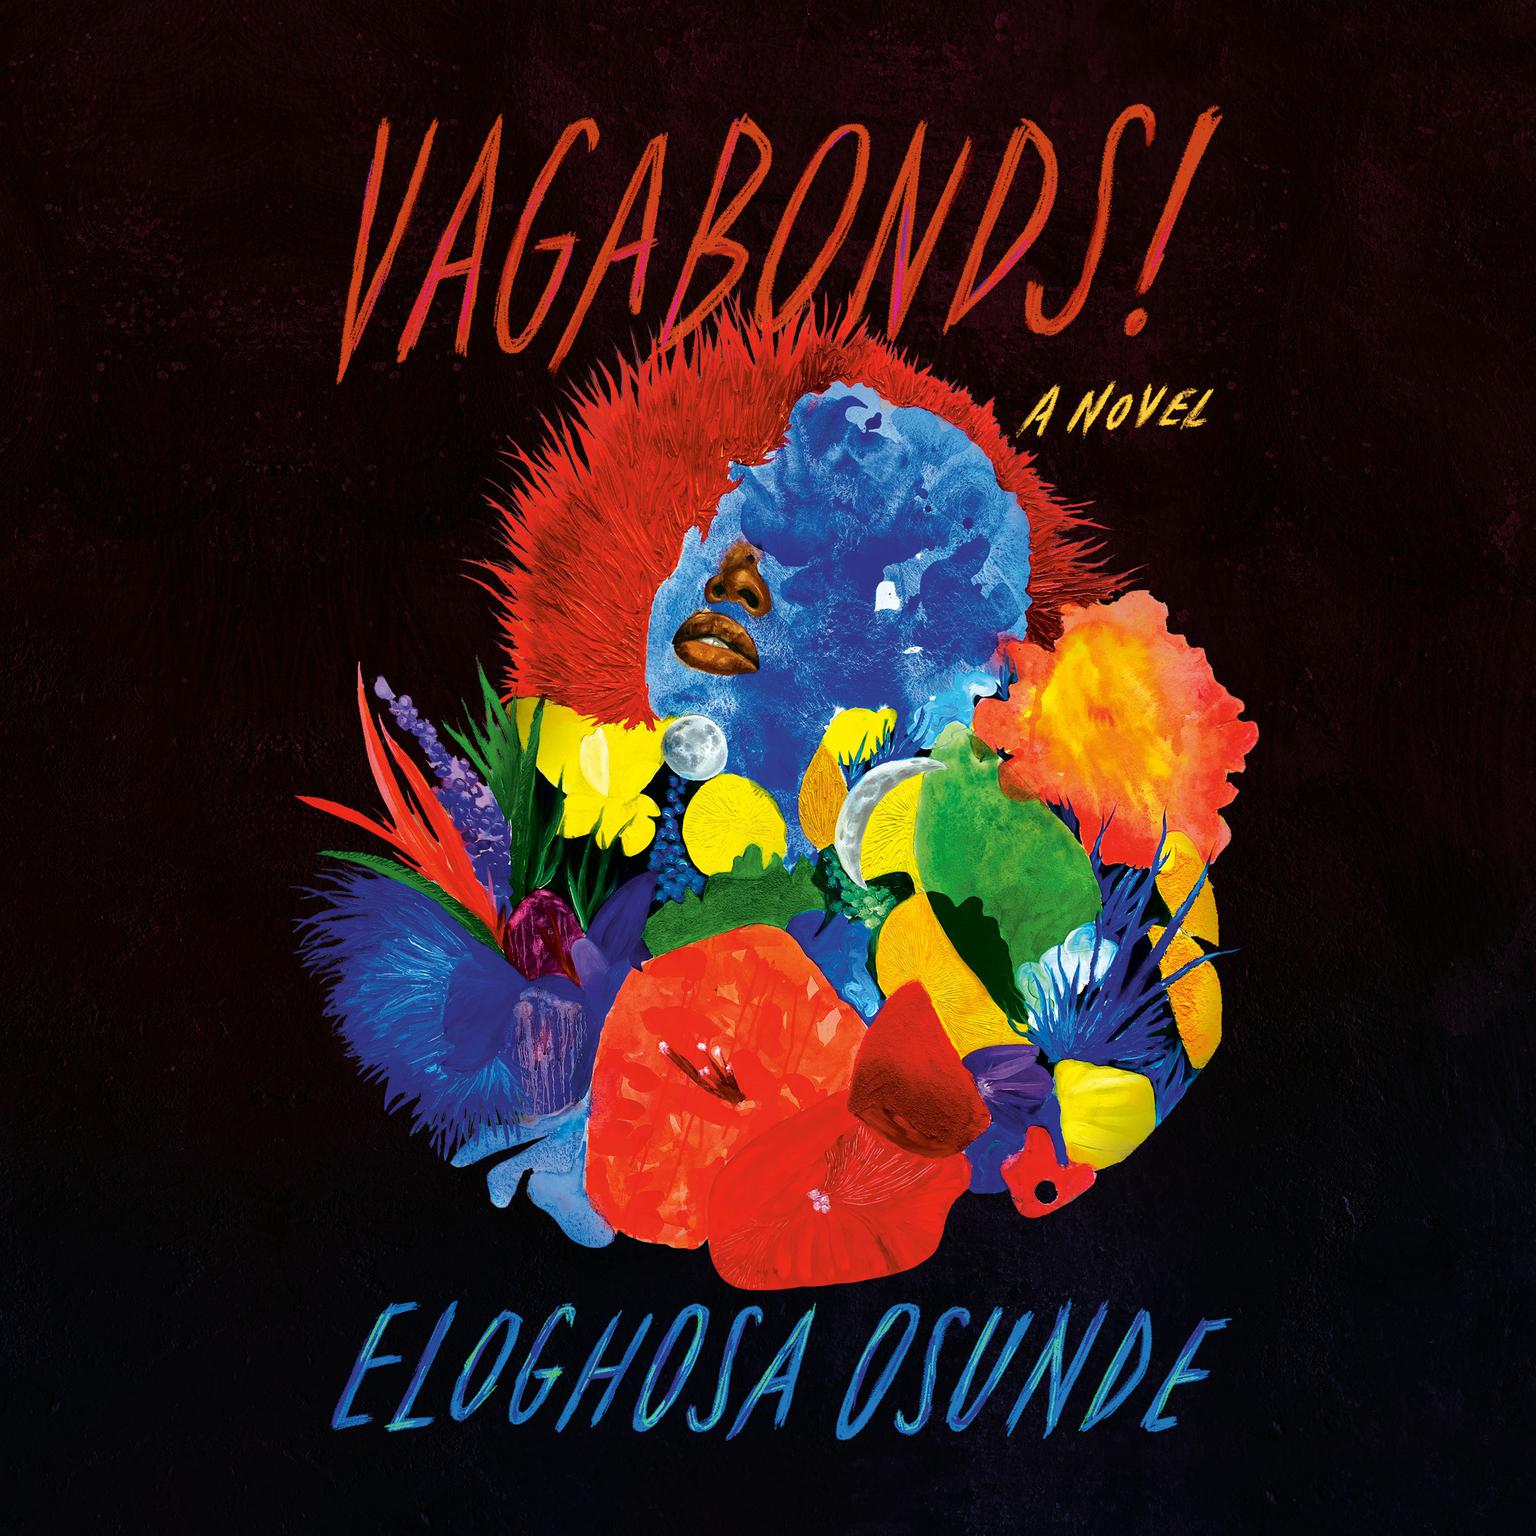 Vagabonds!: A Novel Audiobook, by Eloghosa Osunde